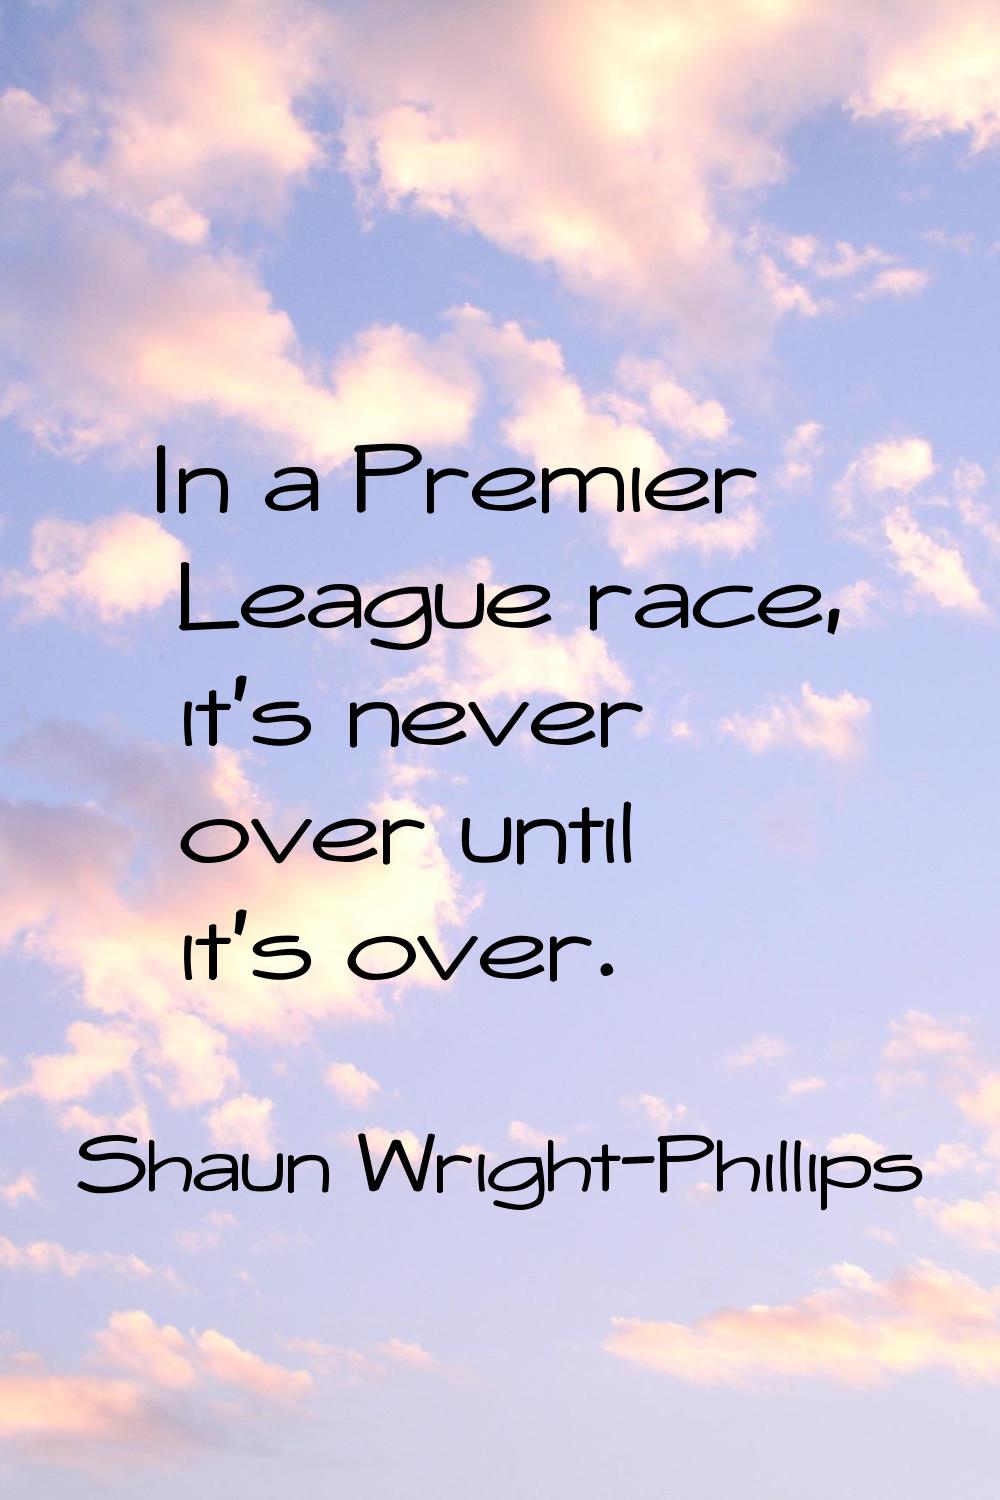 In a Premier League race, it's never over until it's over.